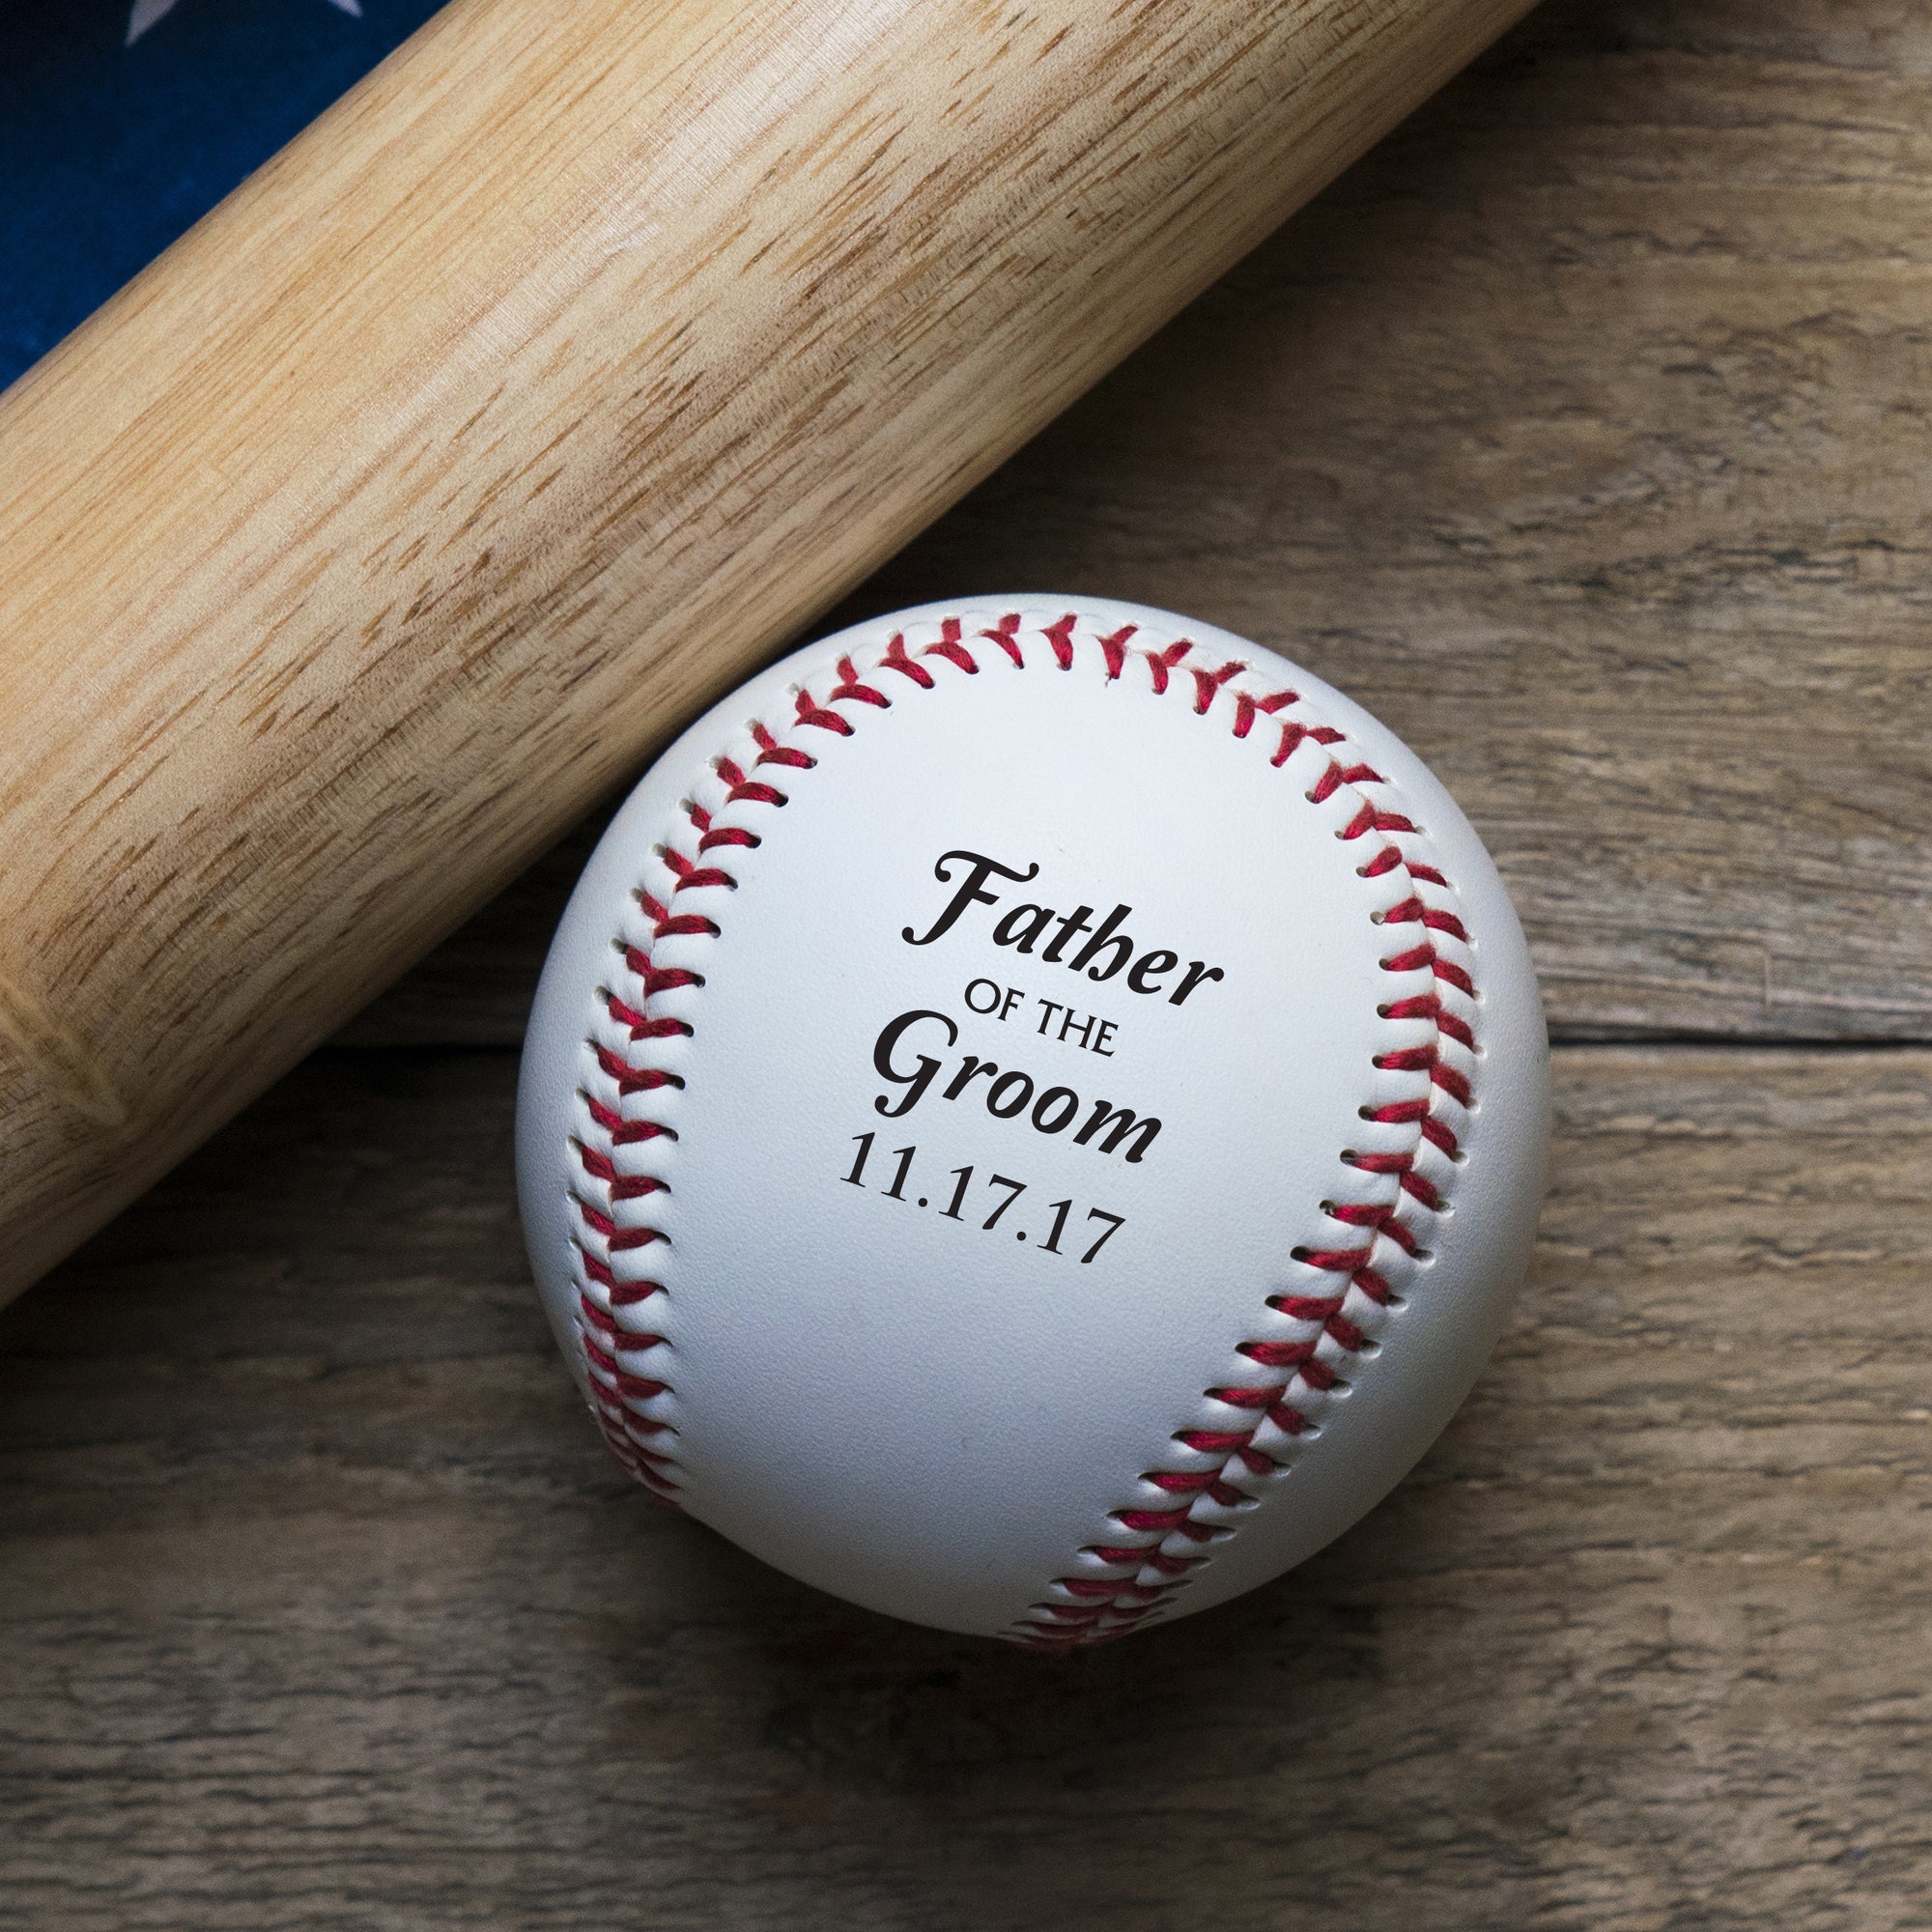 Father of the Groom Baseball